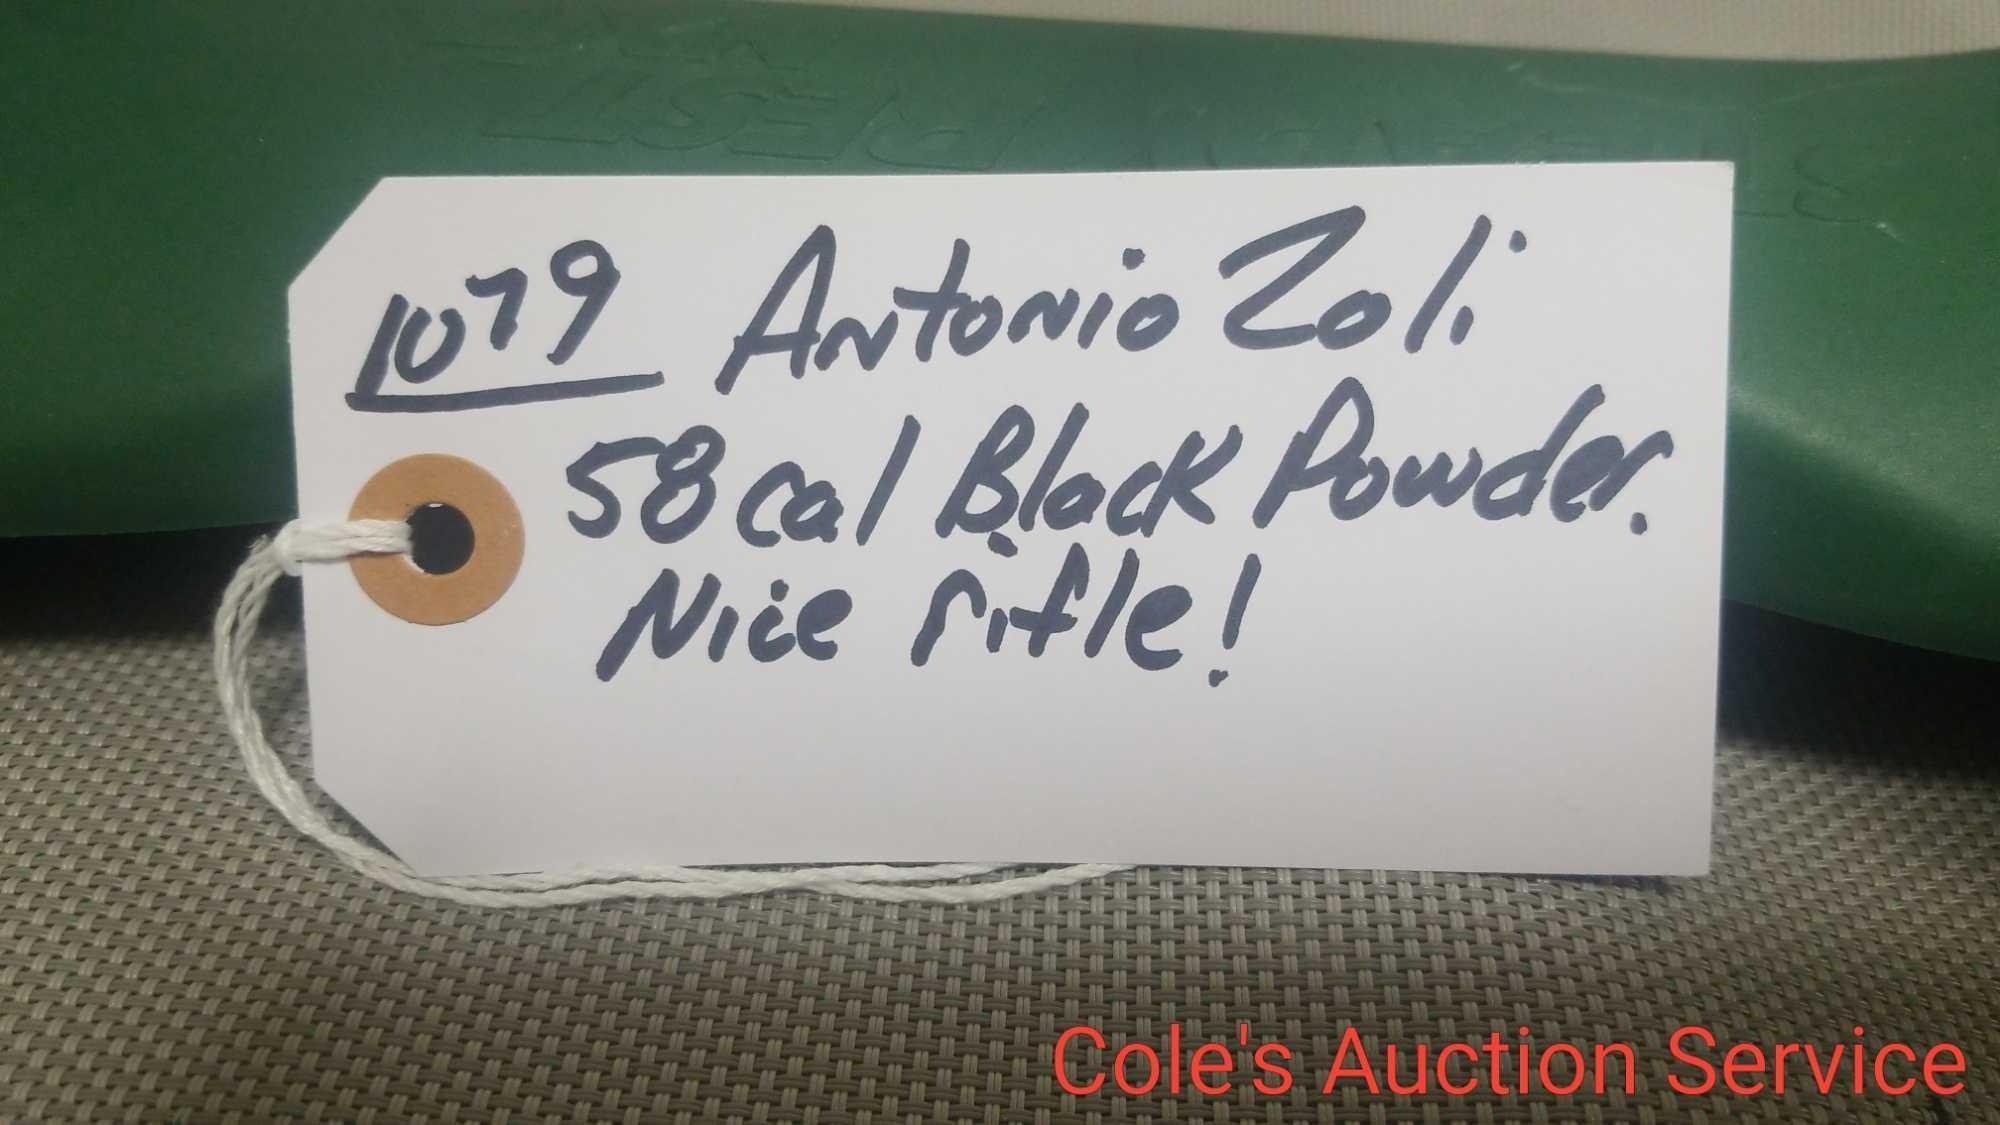 High quality Antonio Zoli 58 caliber black powder rifle. See photos for details.